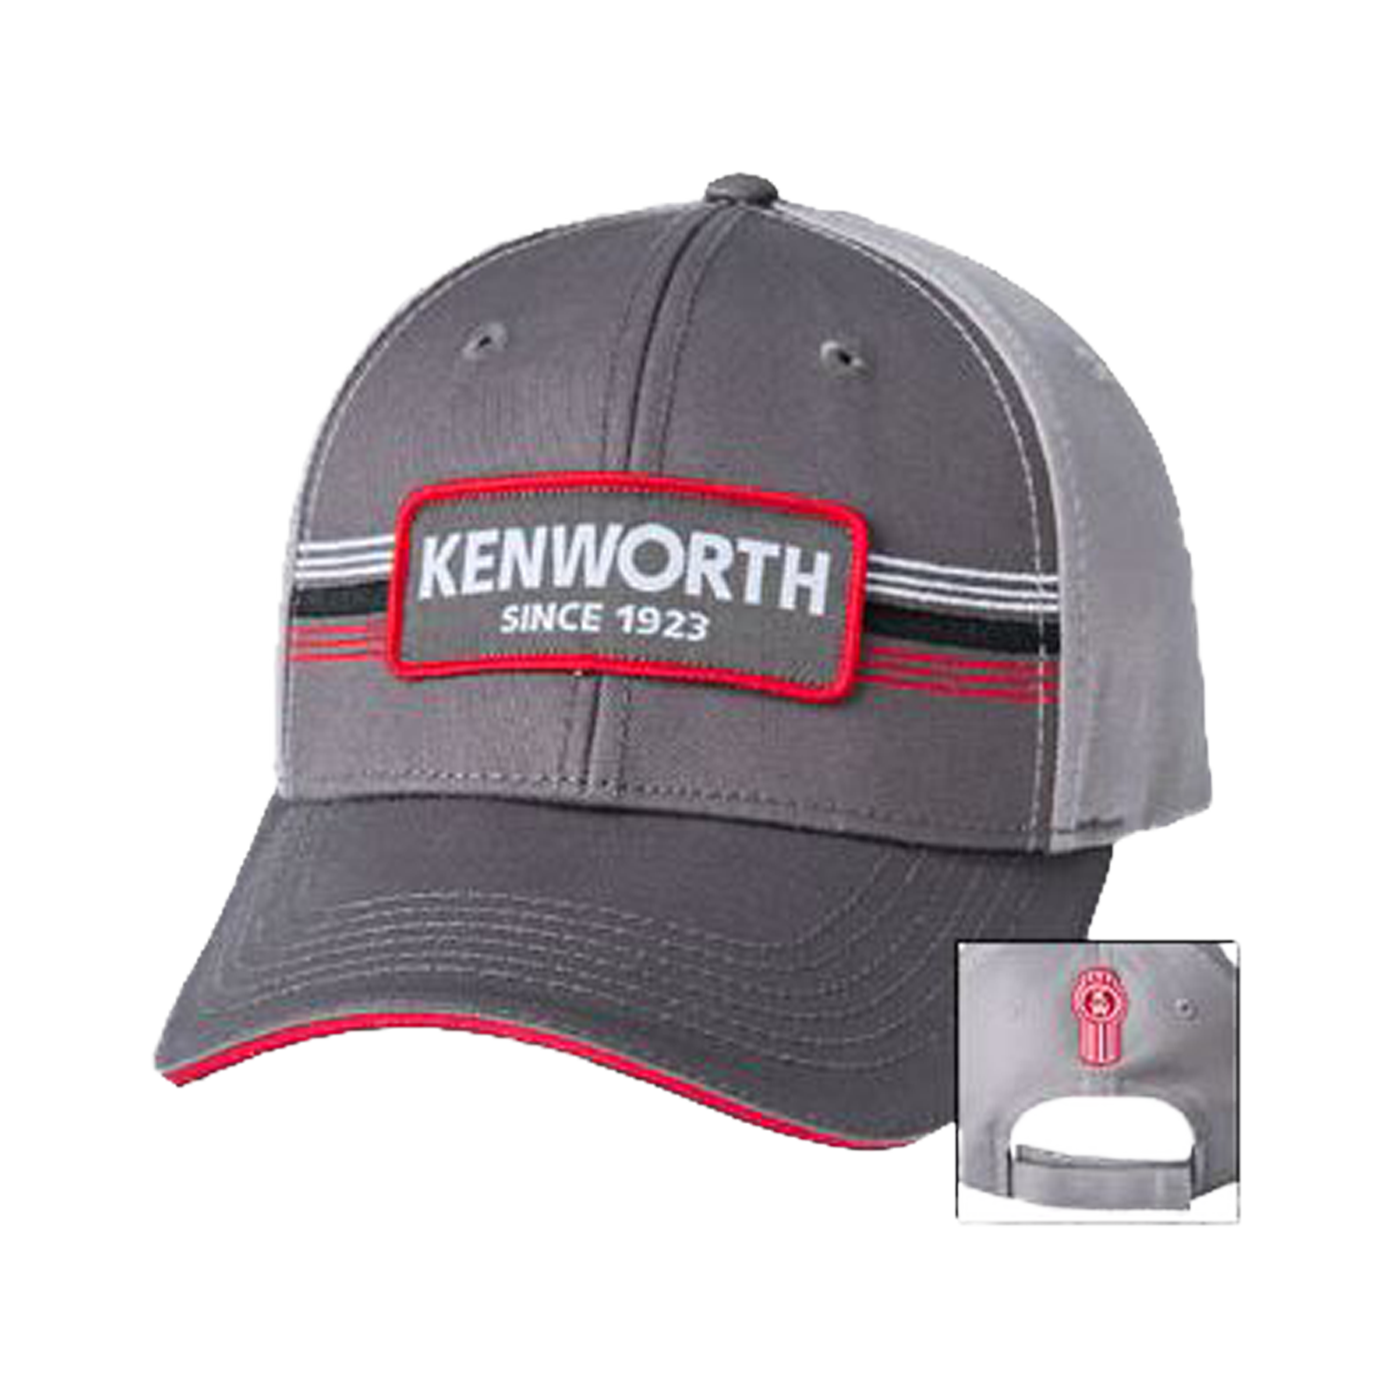 Since 1923 Kenworth Cap